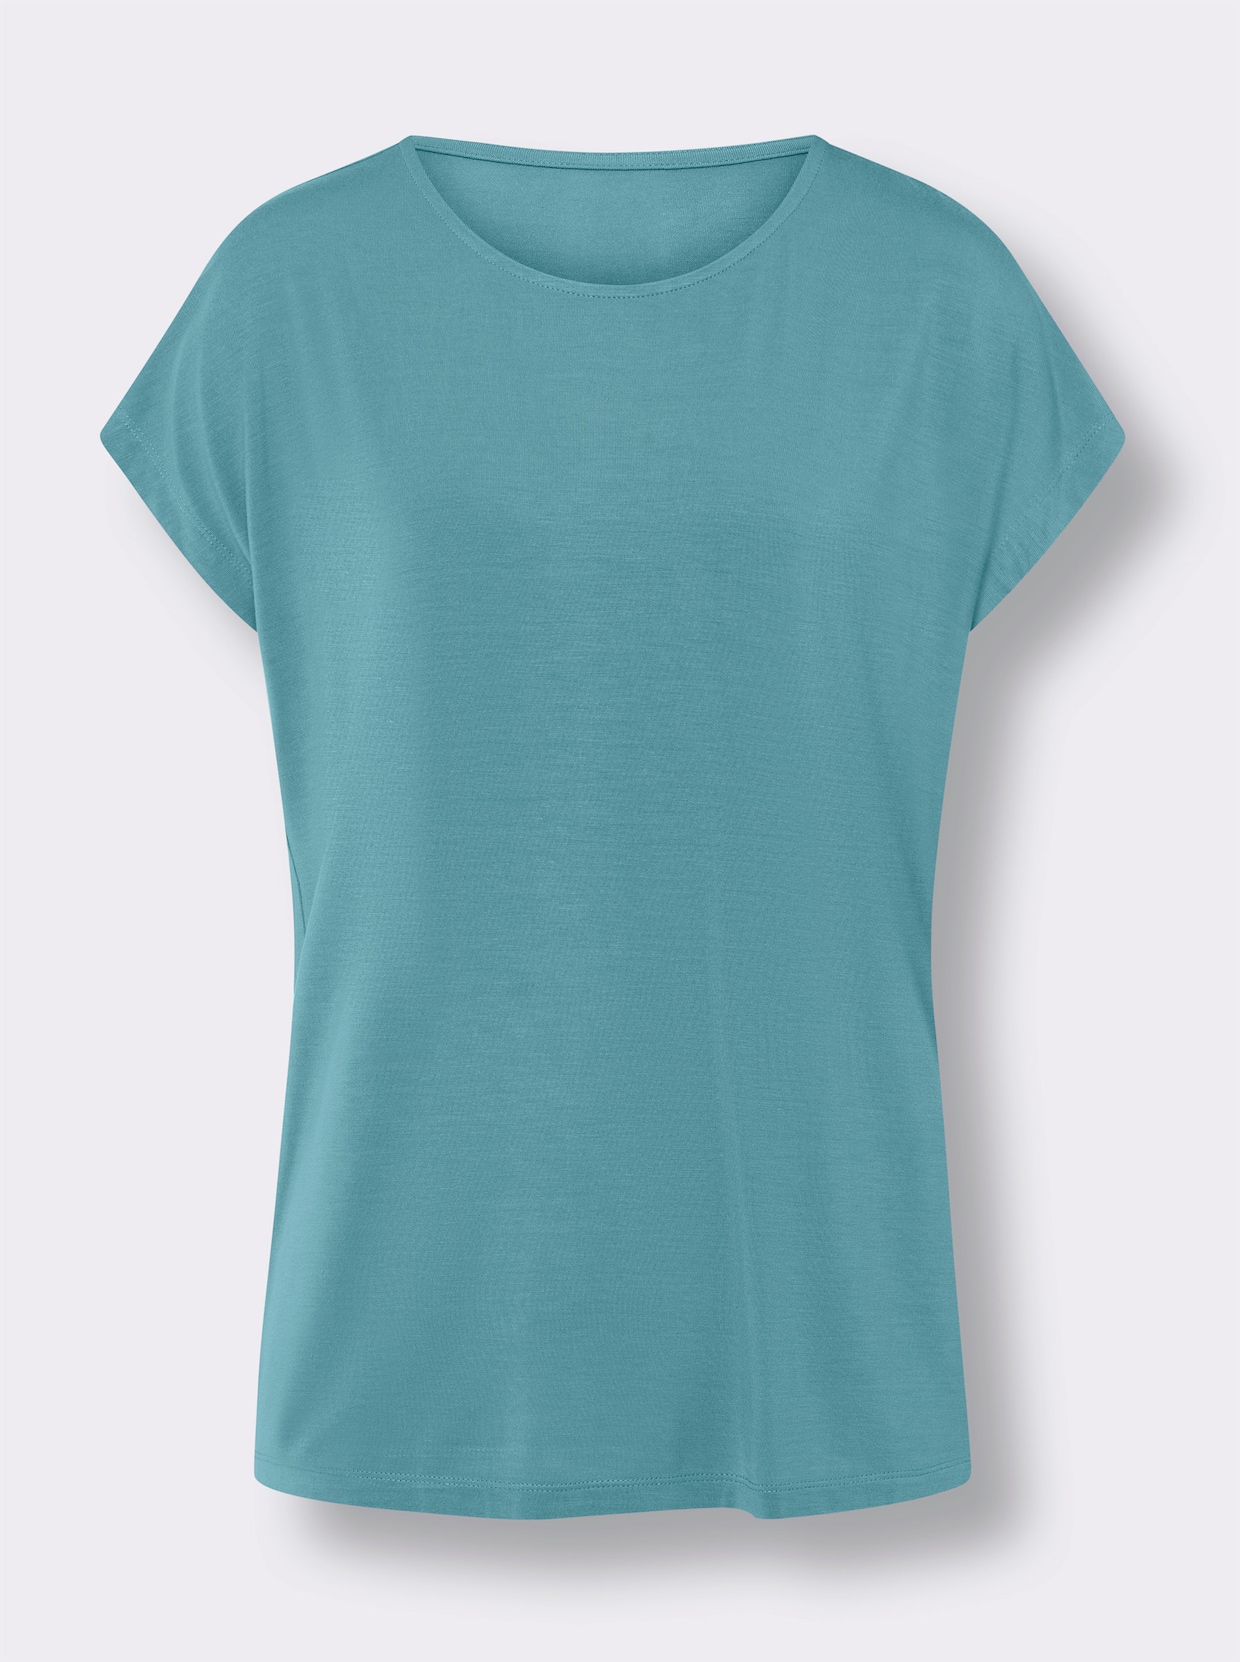 Tričko s krátkým rukávem - oceánově modrá